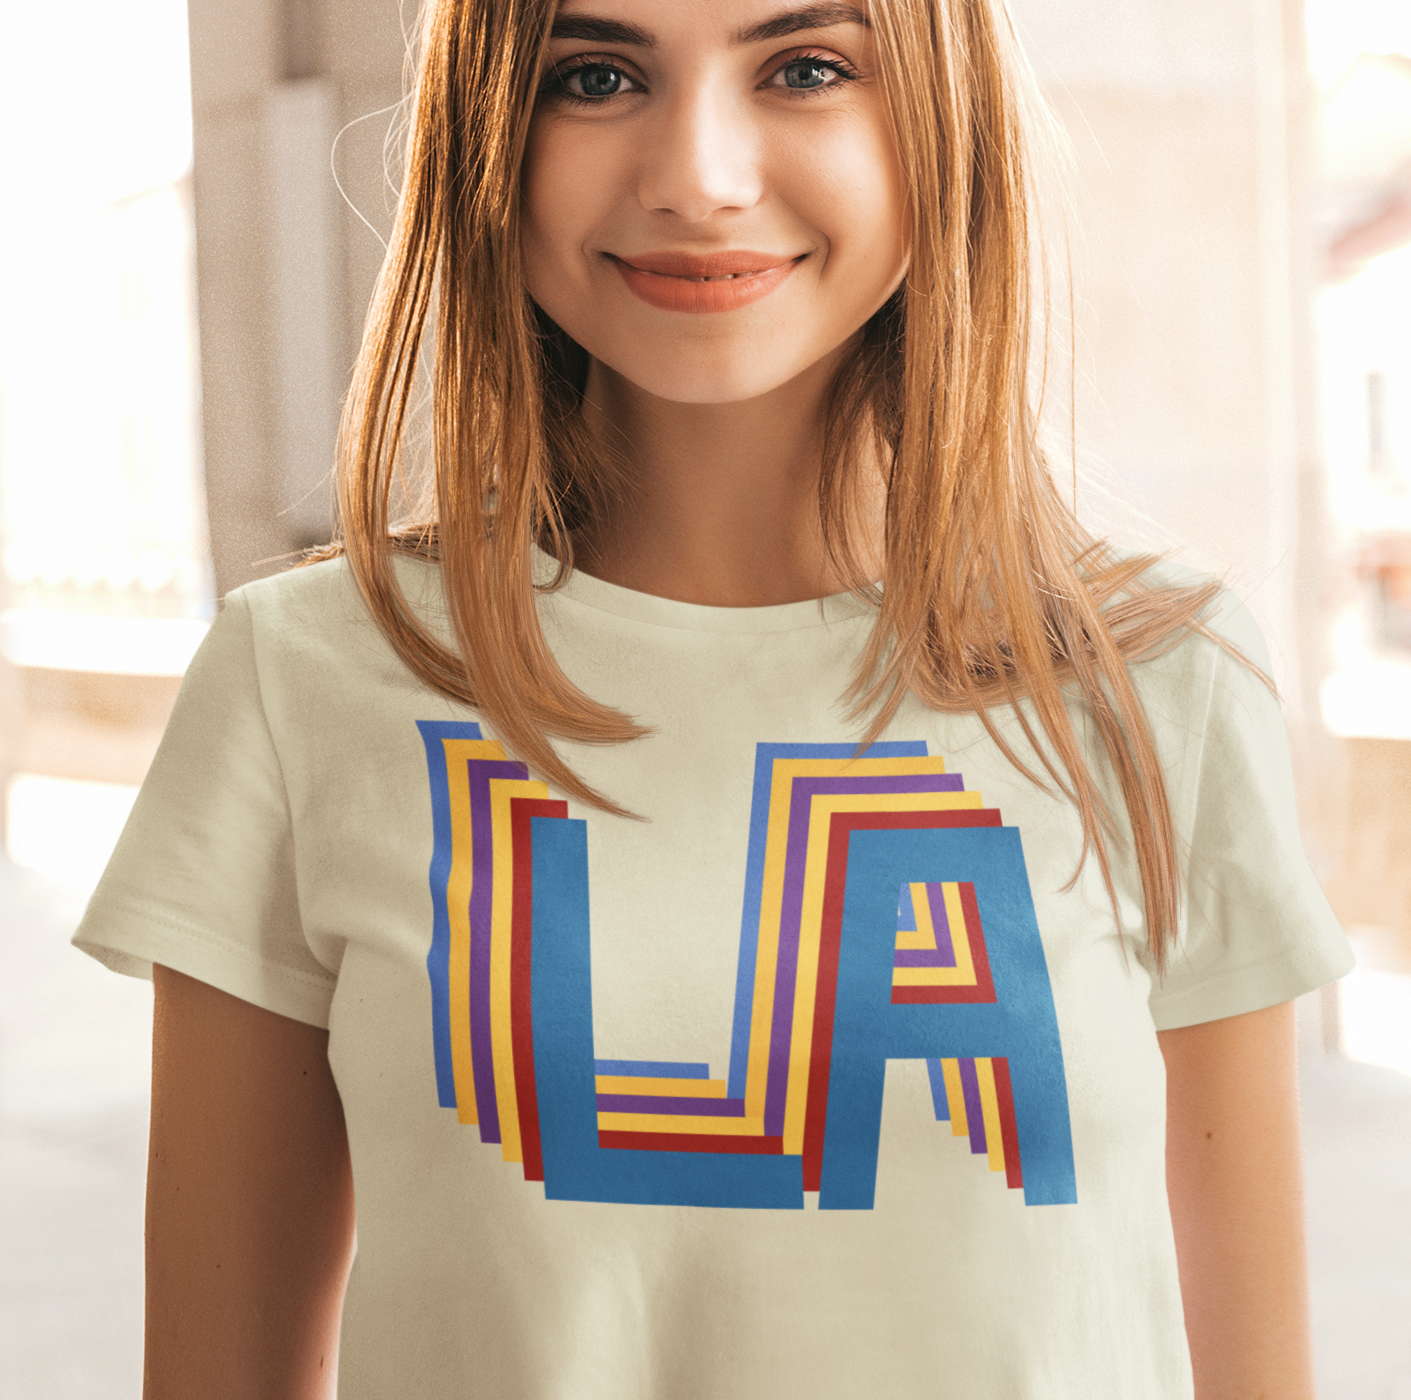 Los Angeles shirt